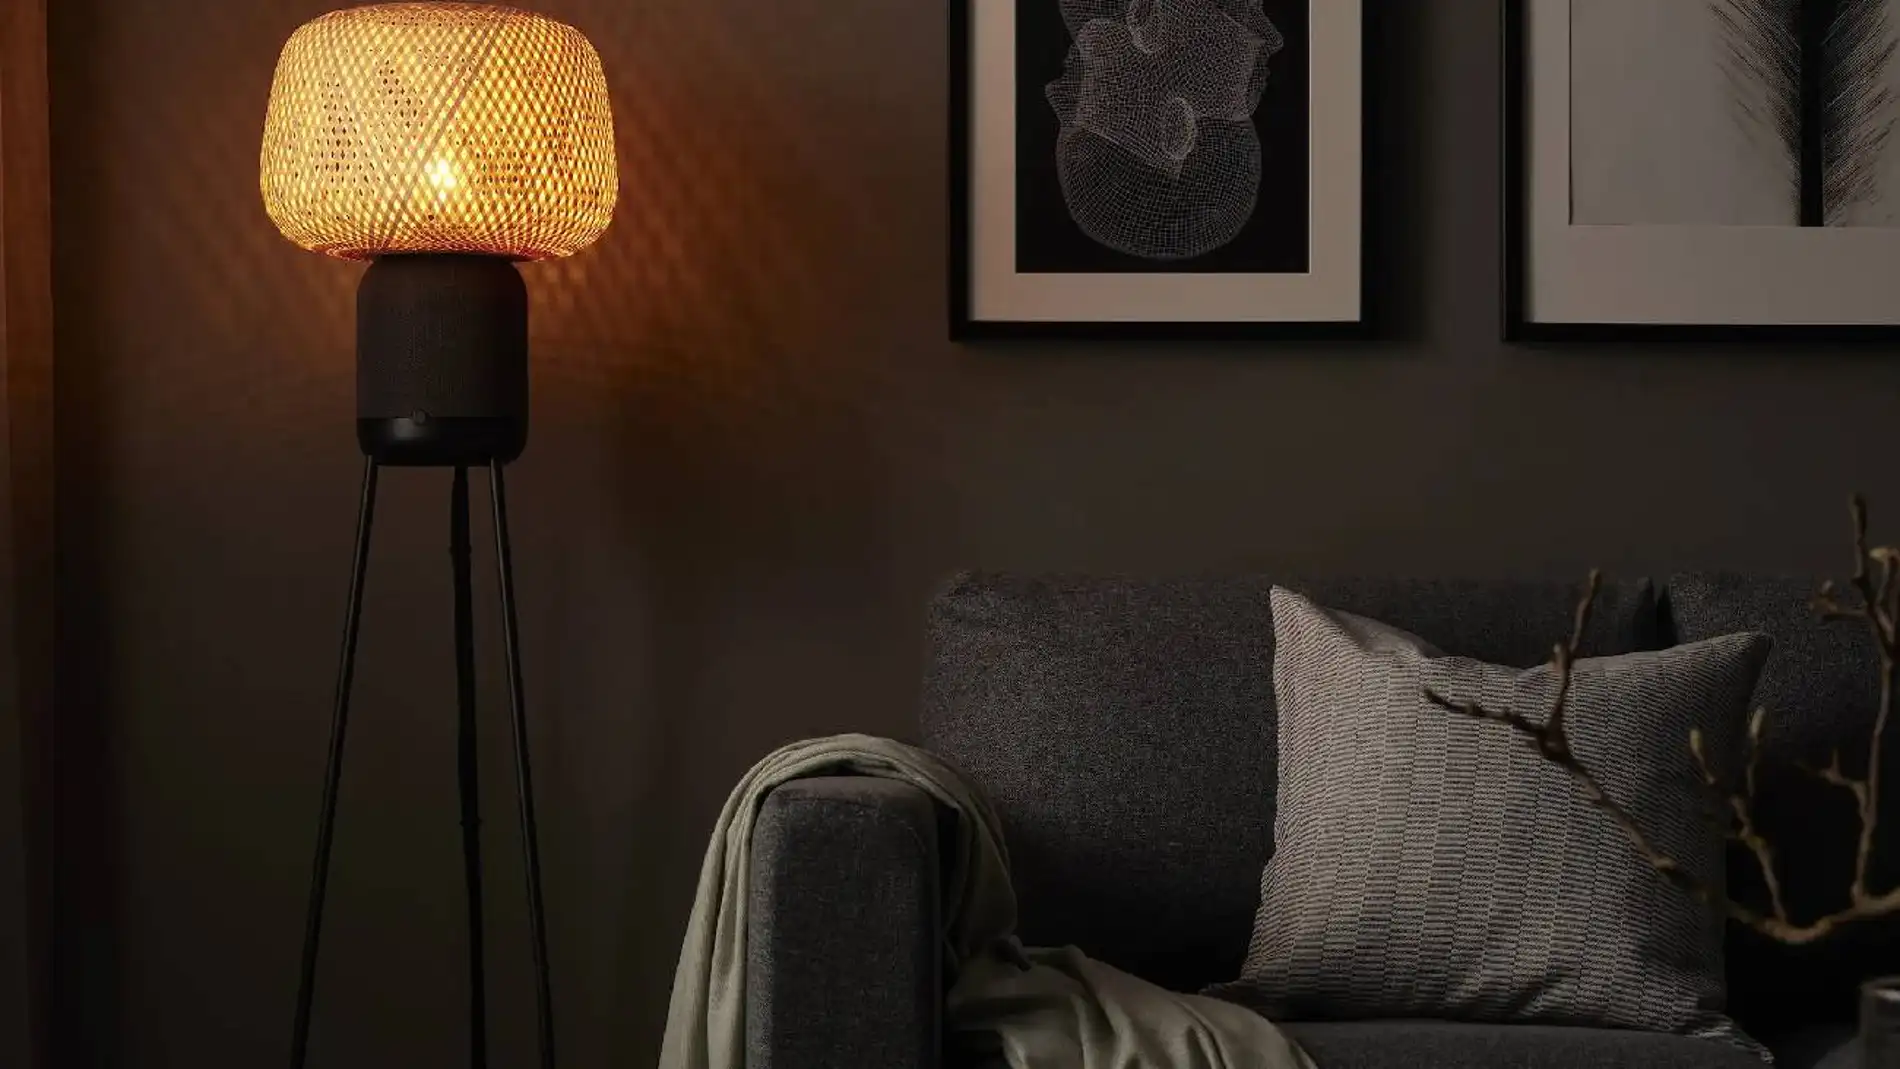 Sonos e IKEA lanzan una lámpara con altavoz perfecta para crear un sistema de sonido envolvente